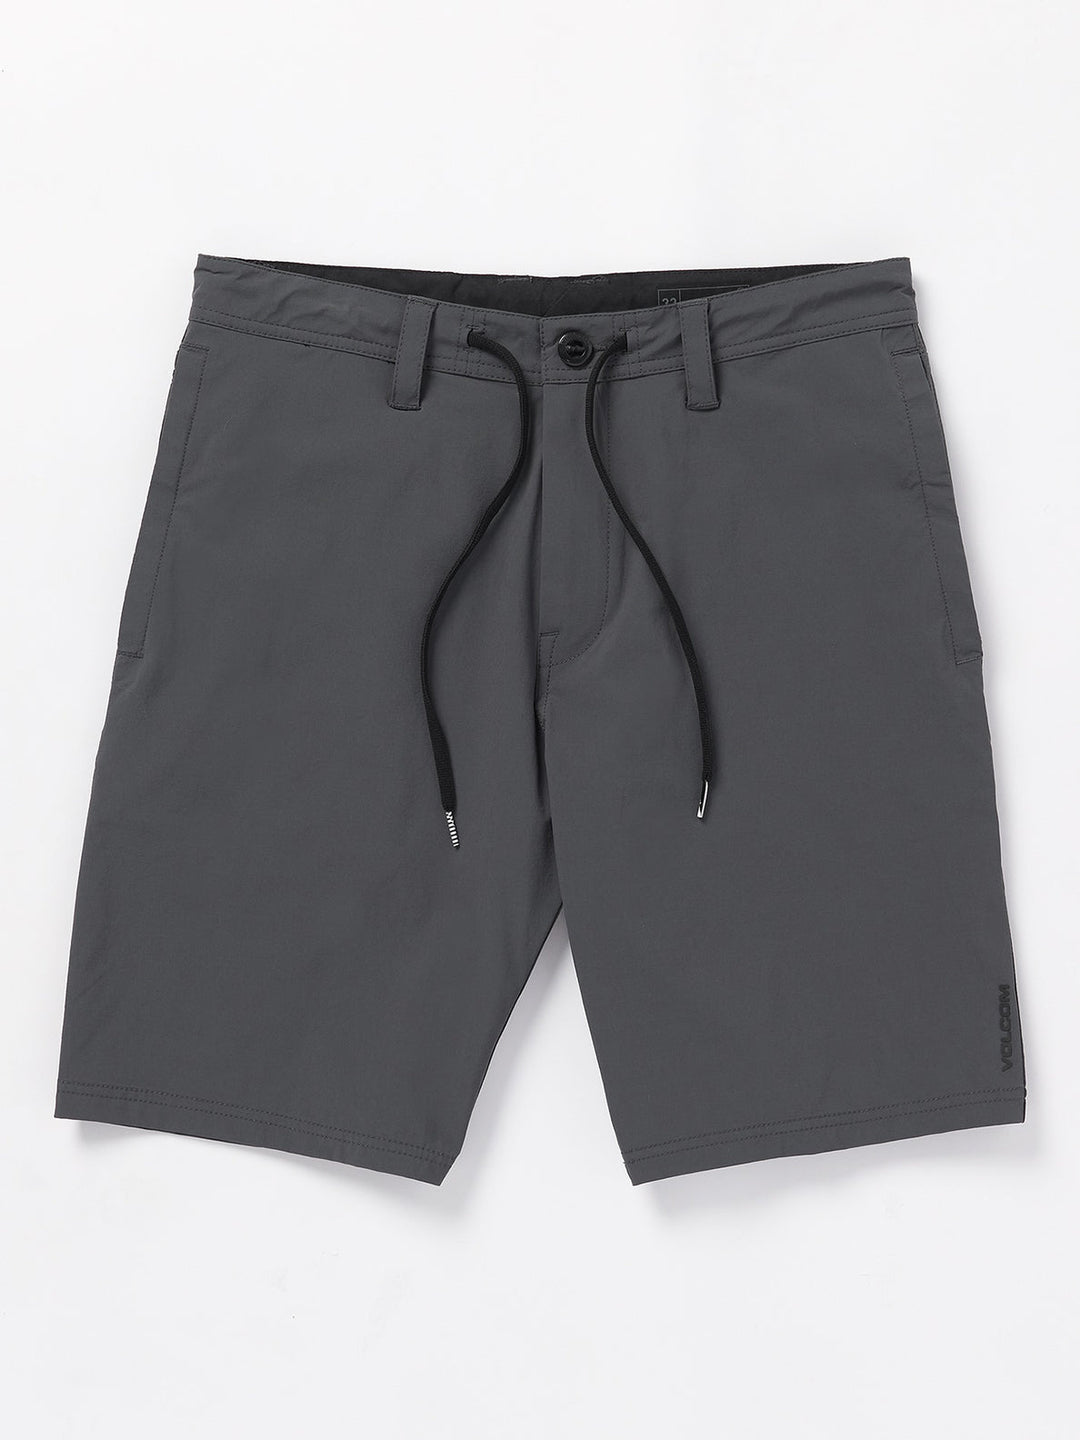 Volcom Voltripper Hybrid Shorts - Asphalt Black - Sun Diego Boardshop